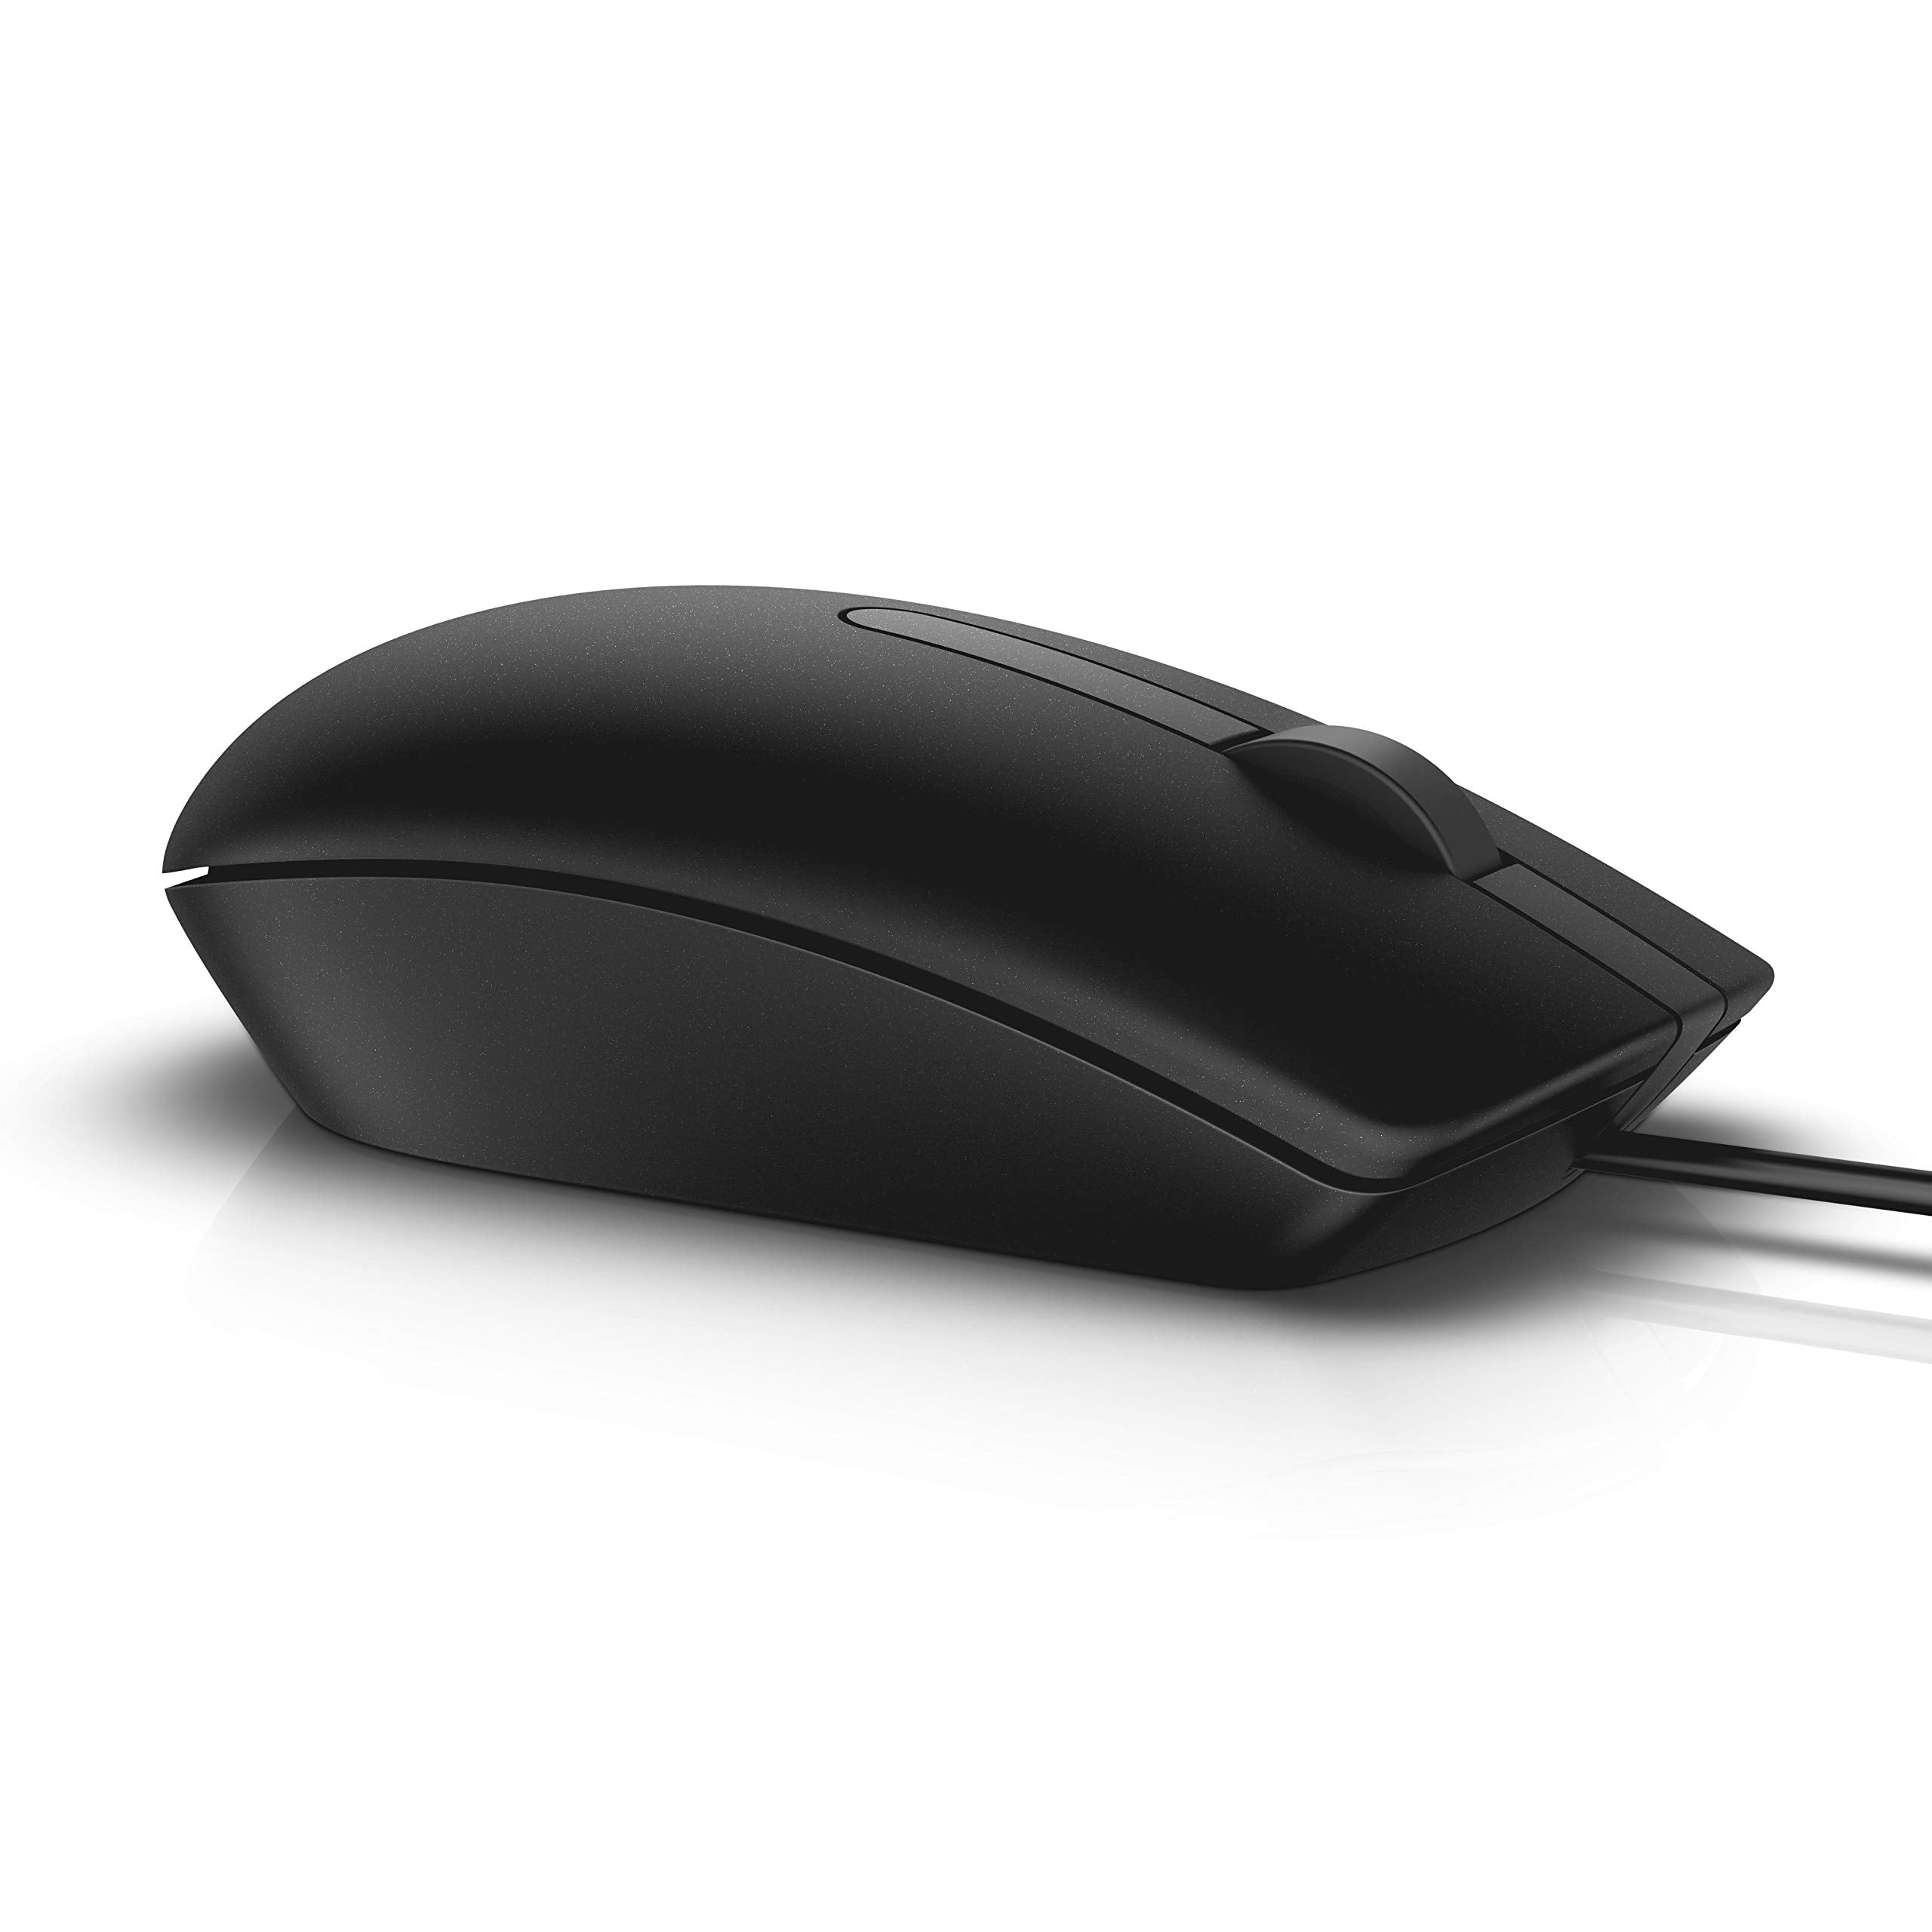 DELL 570-AAIR USB Mouse -Black